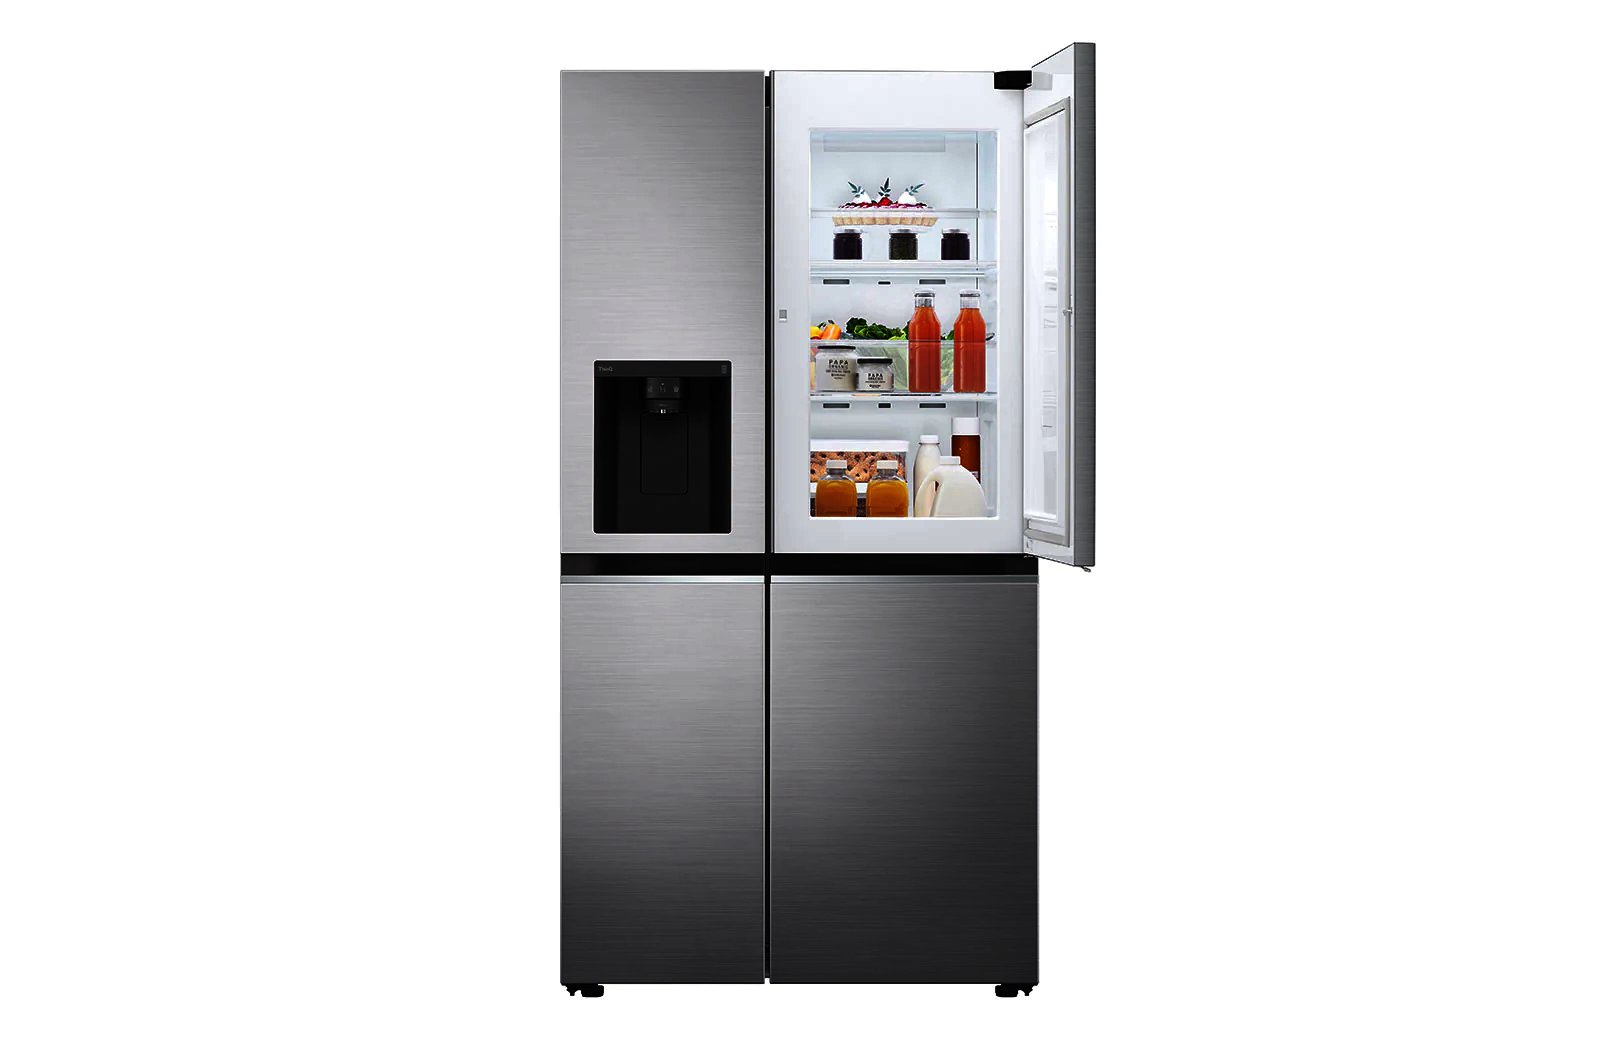 réfrigérateur-lg-gc-j257slrs---635l---garantit-12-mois